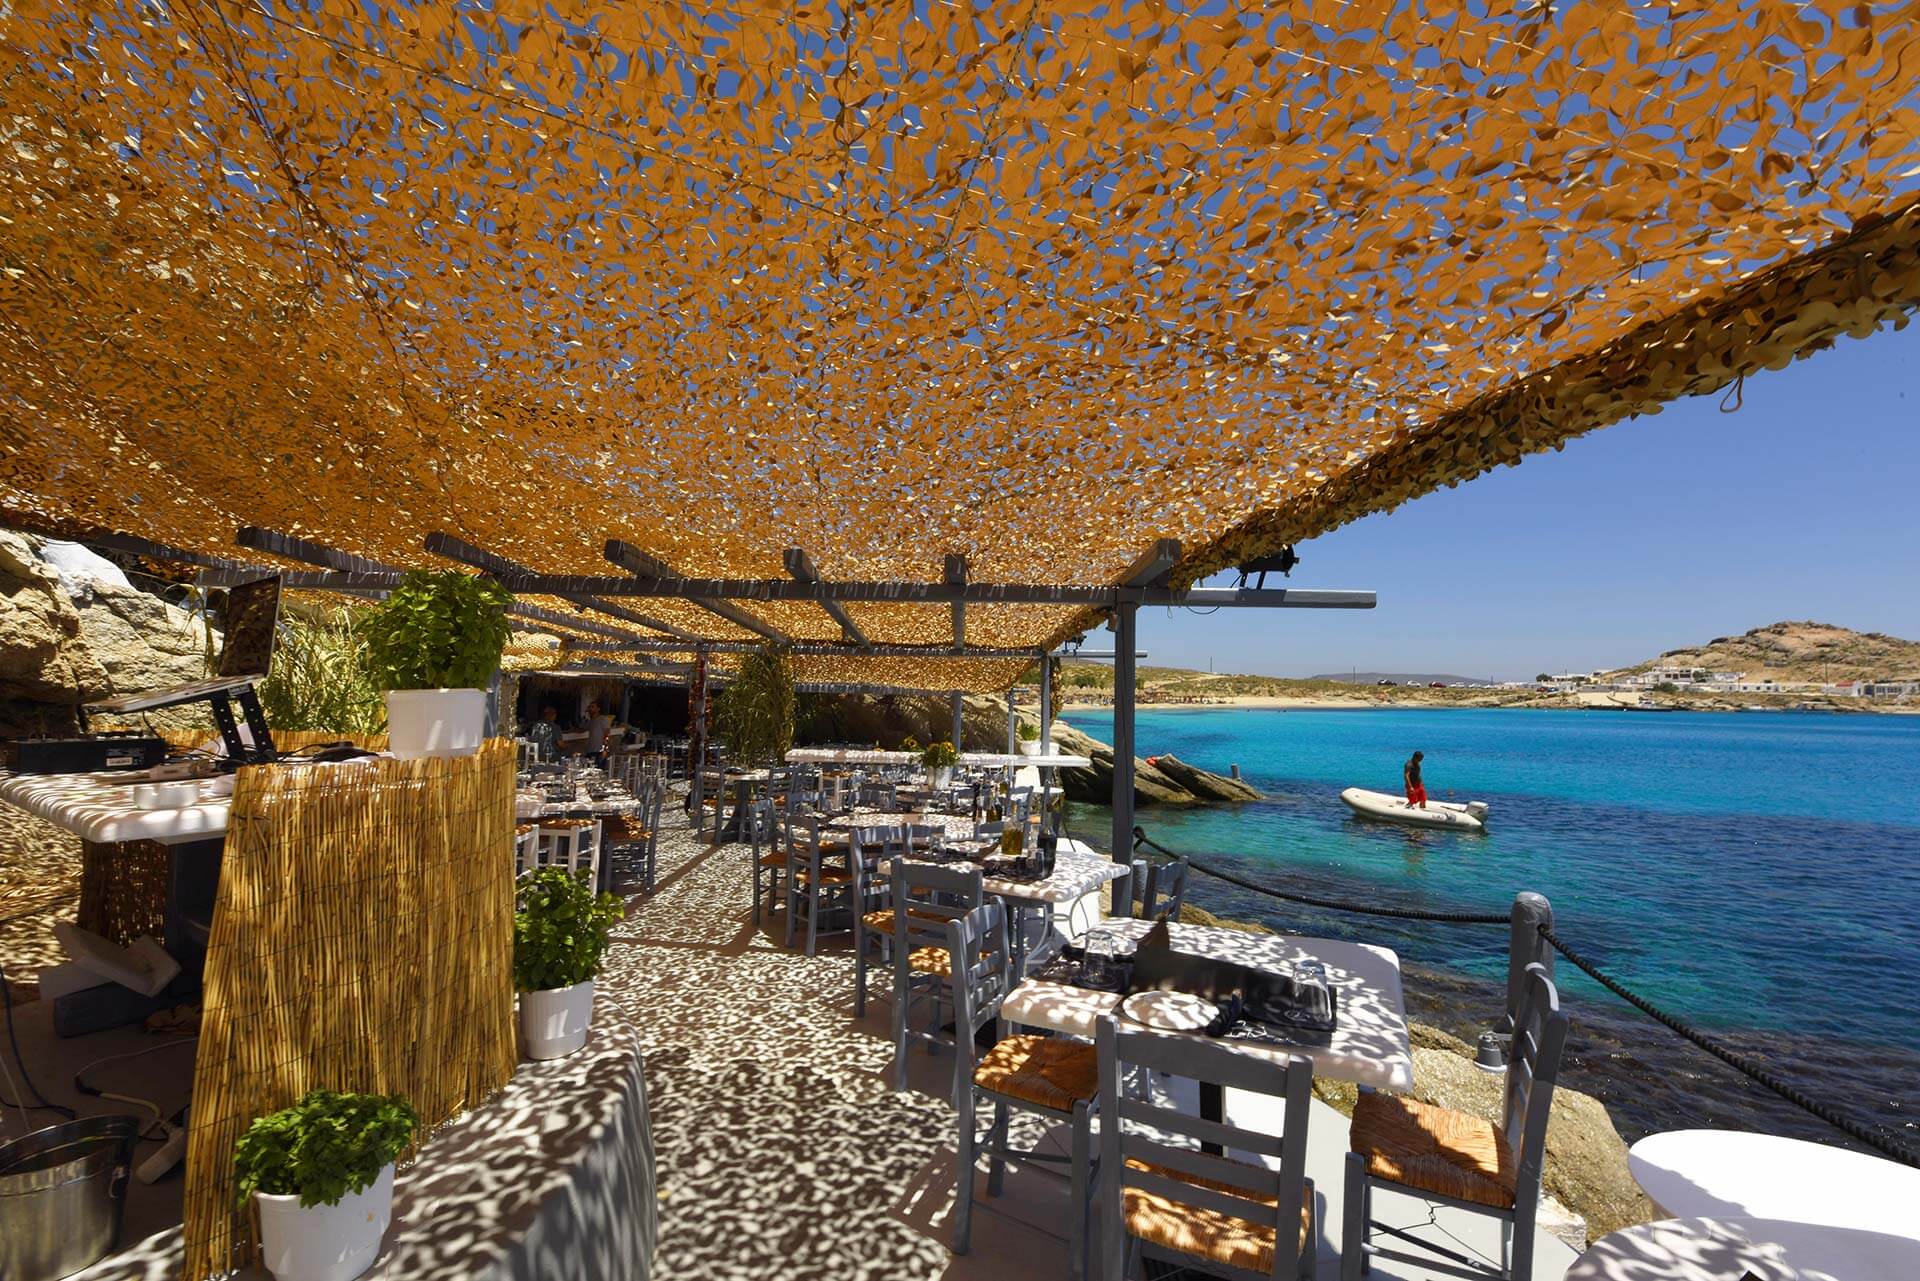 Best restaurants to eat in Mykonos